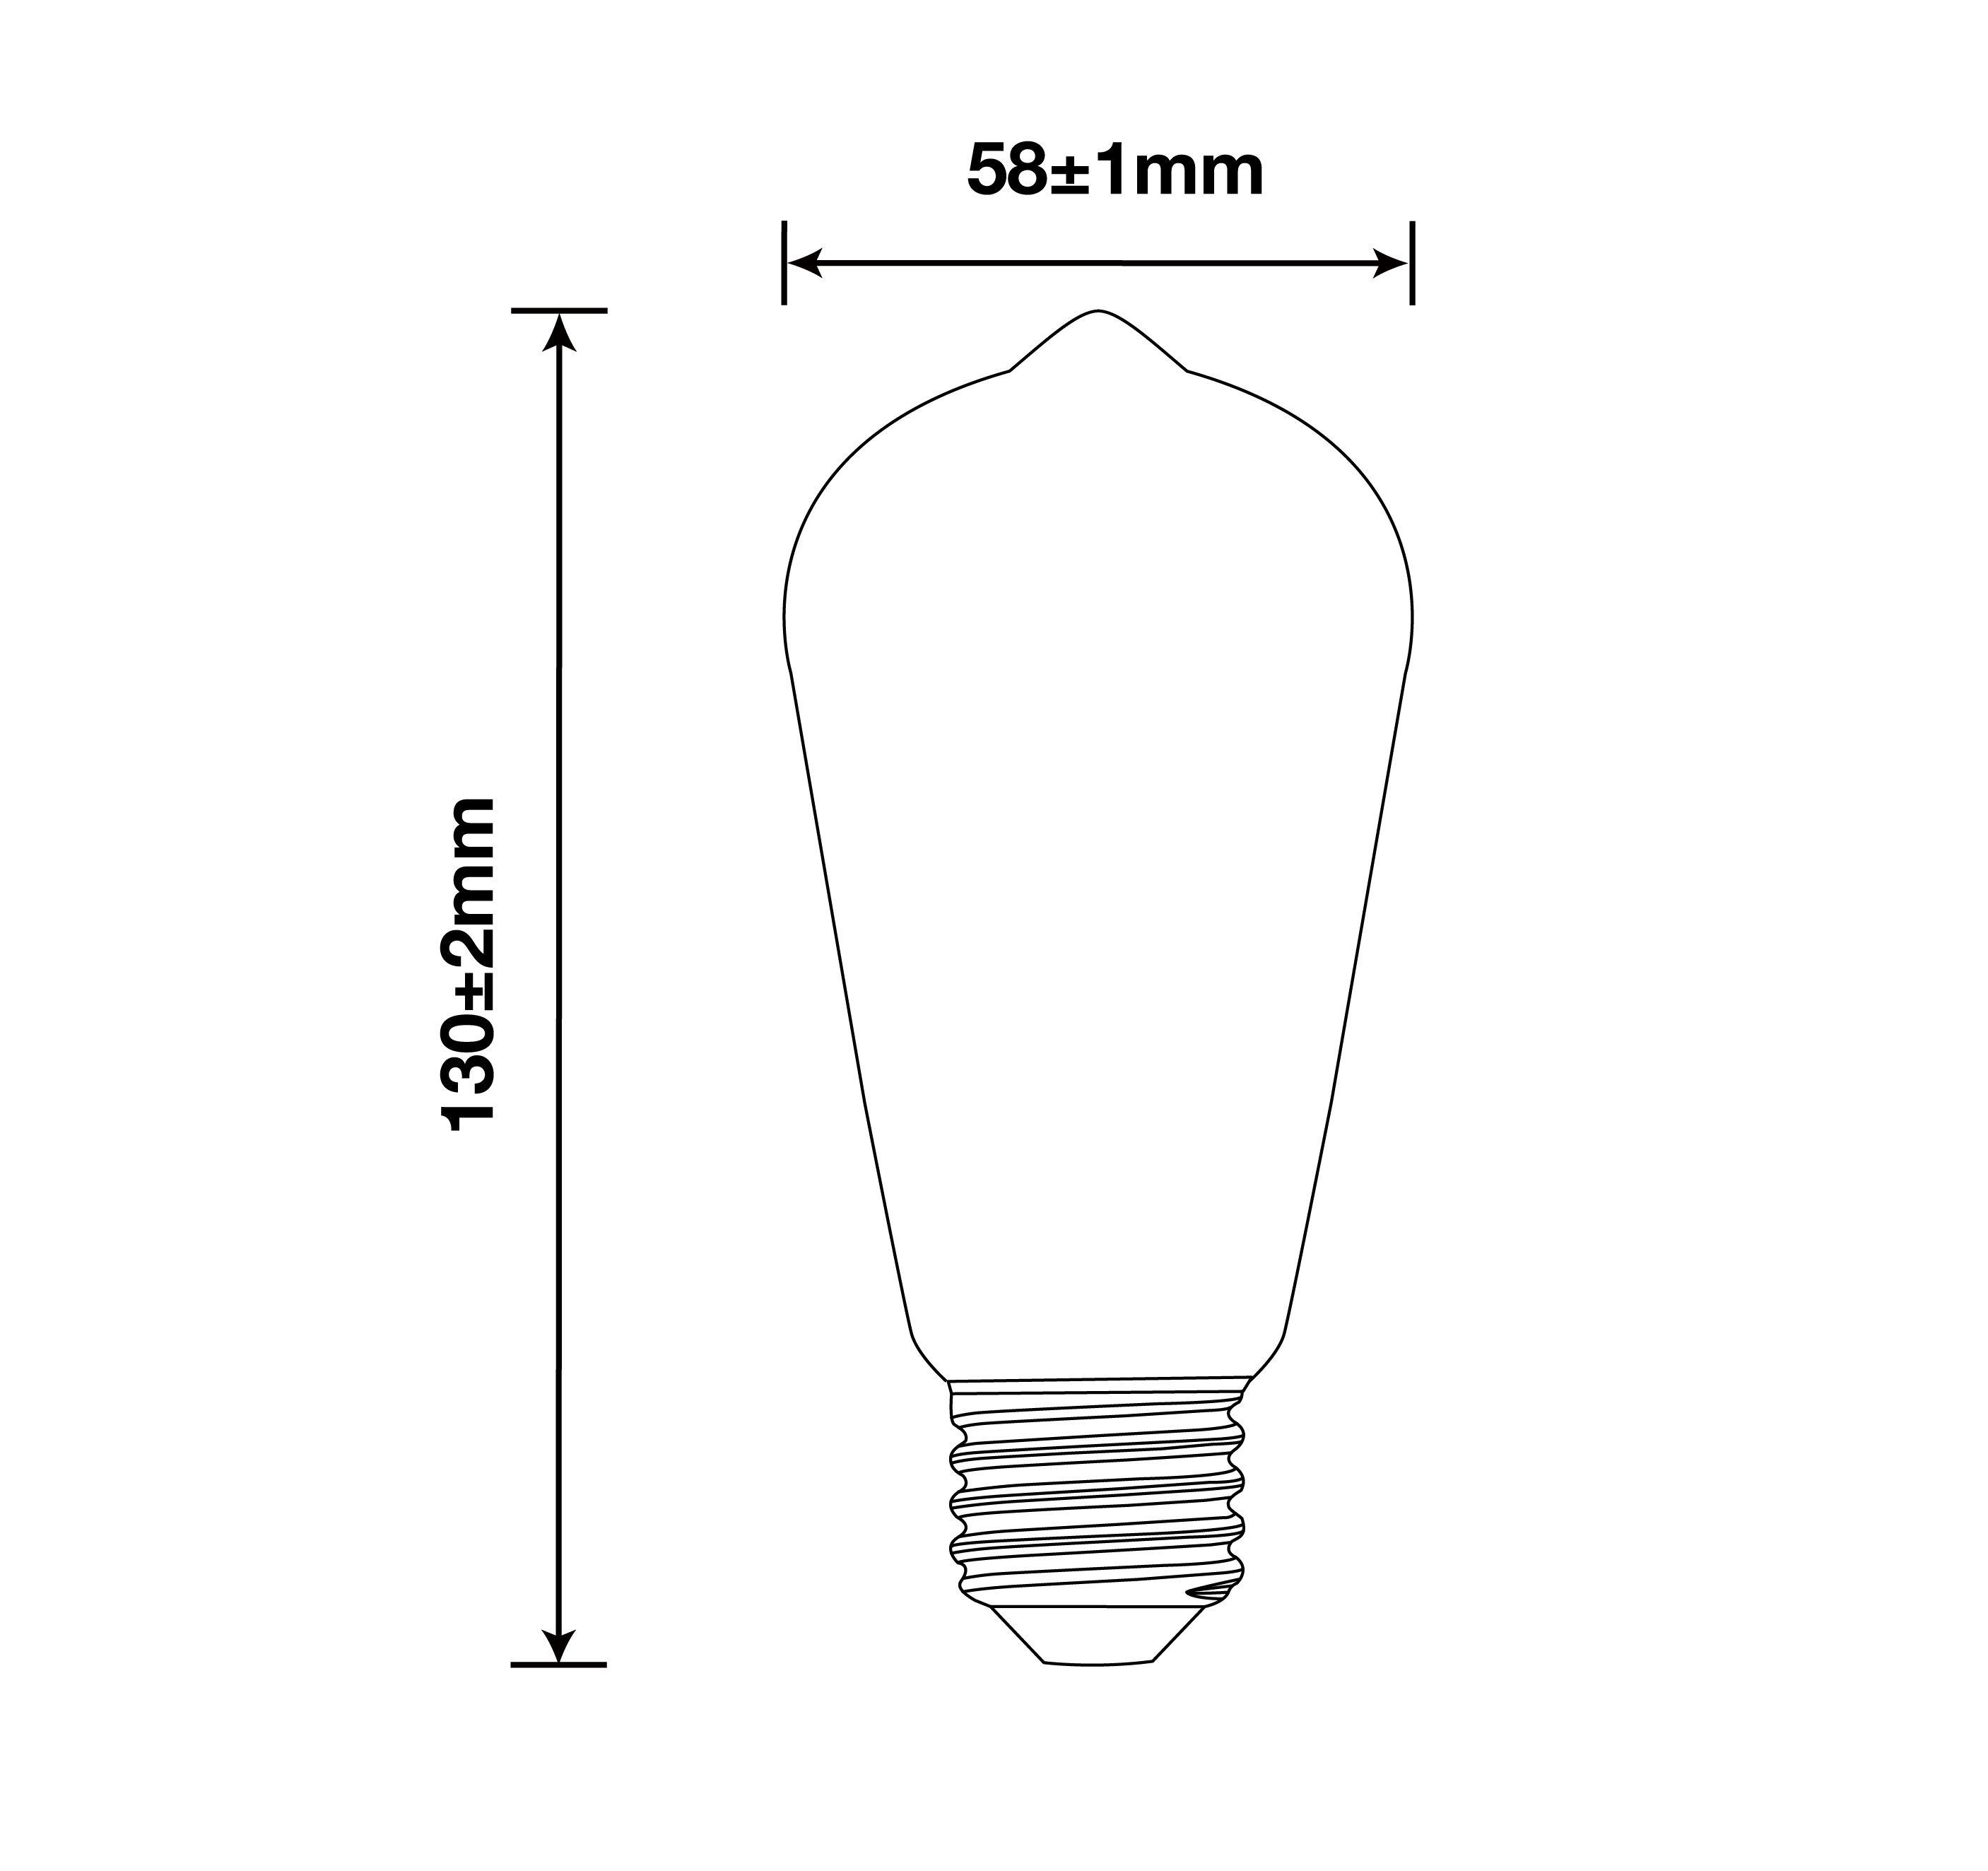 ST19 Smart Bulbs (2200-6500K)